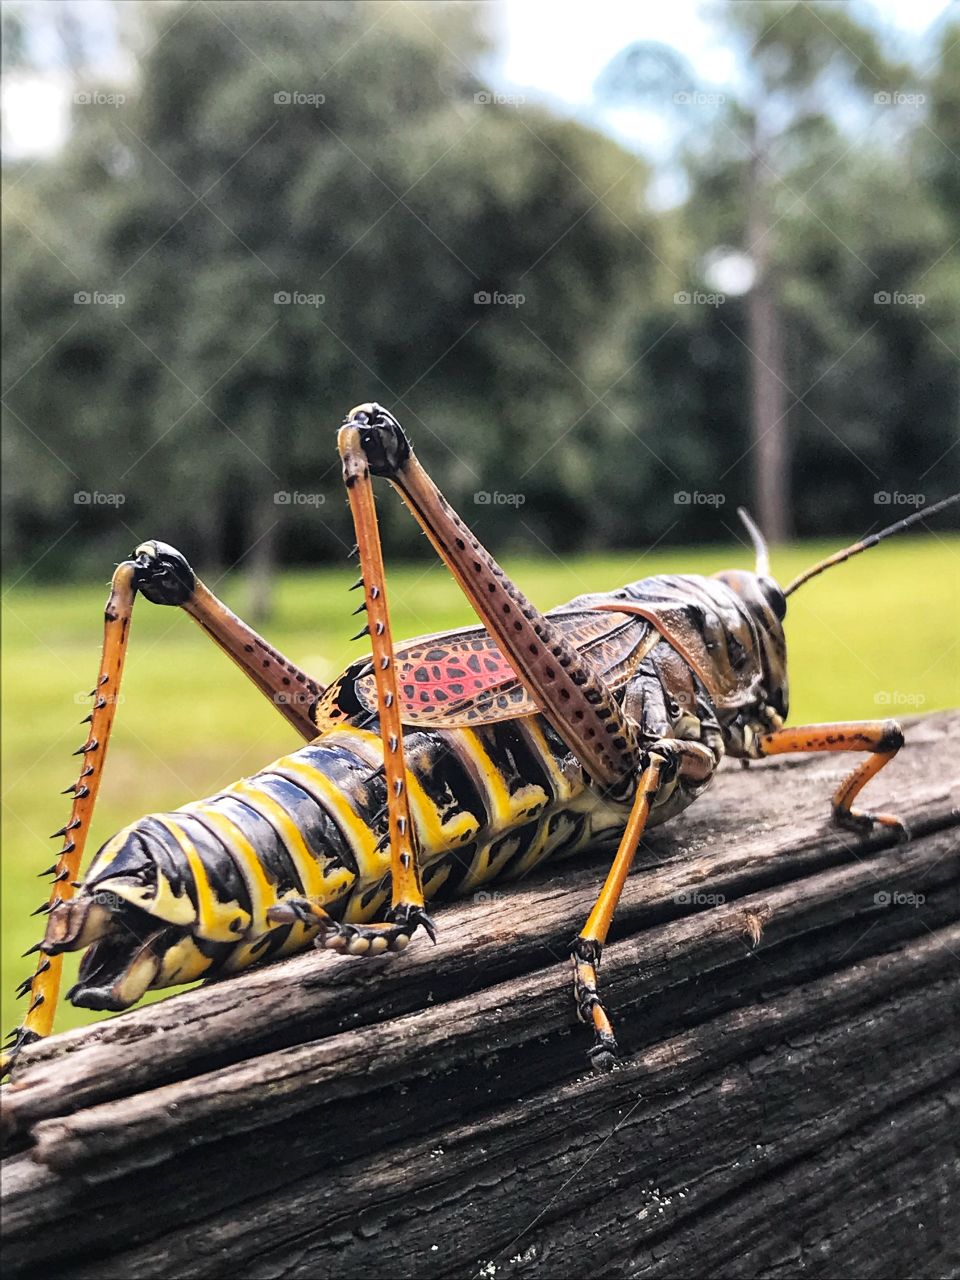 I’m on the fence ... grasshopper observation